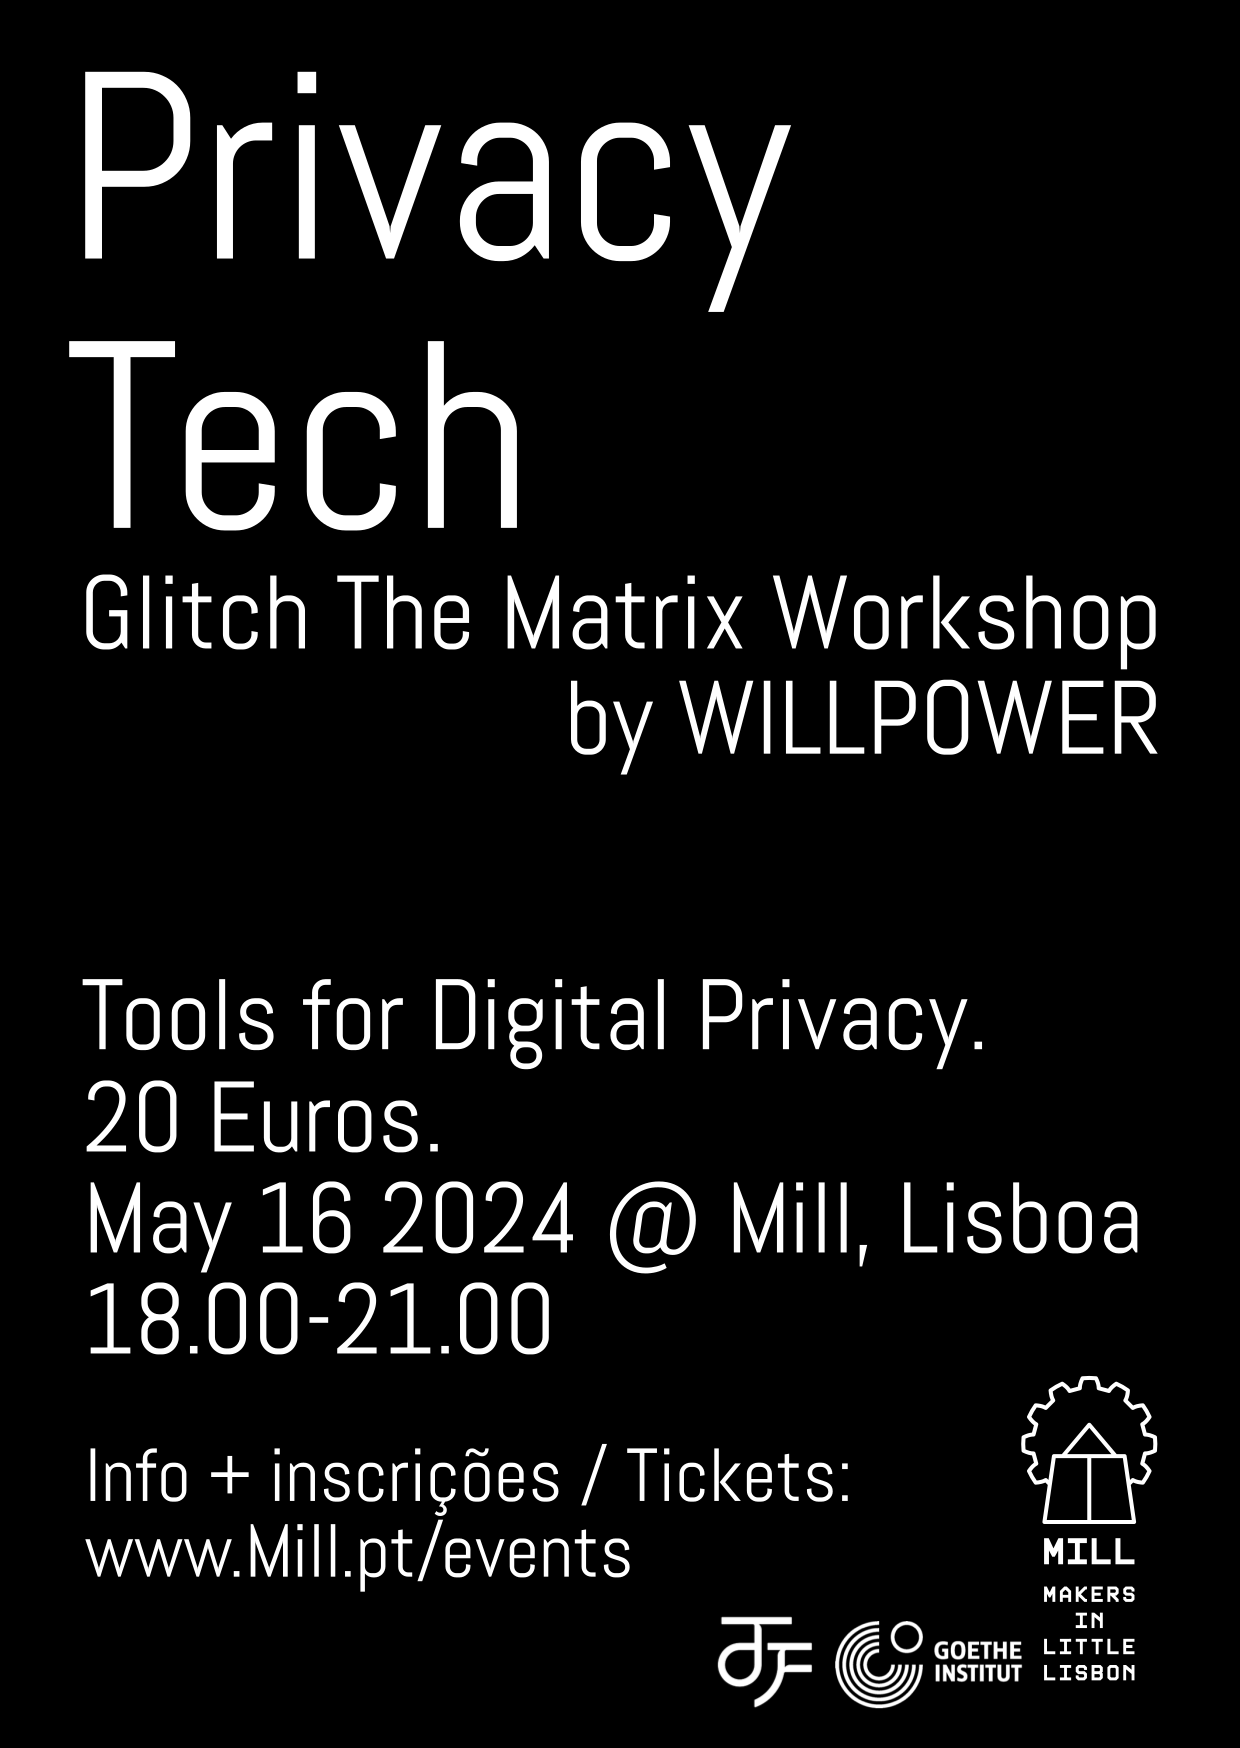 Privacy Tech: Glitch The Matrix Workshop by WILLPOWER